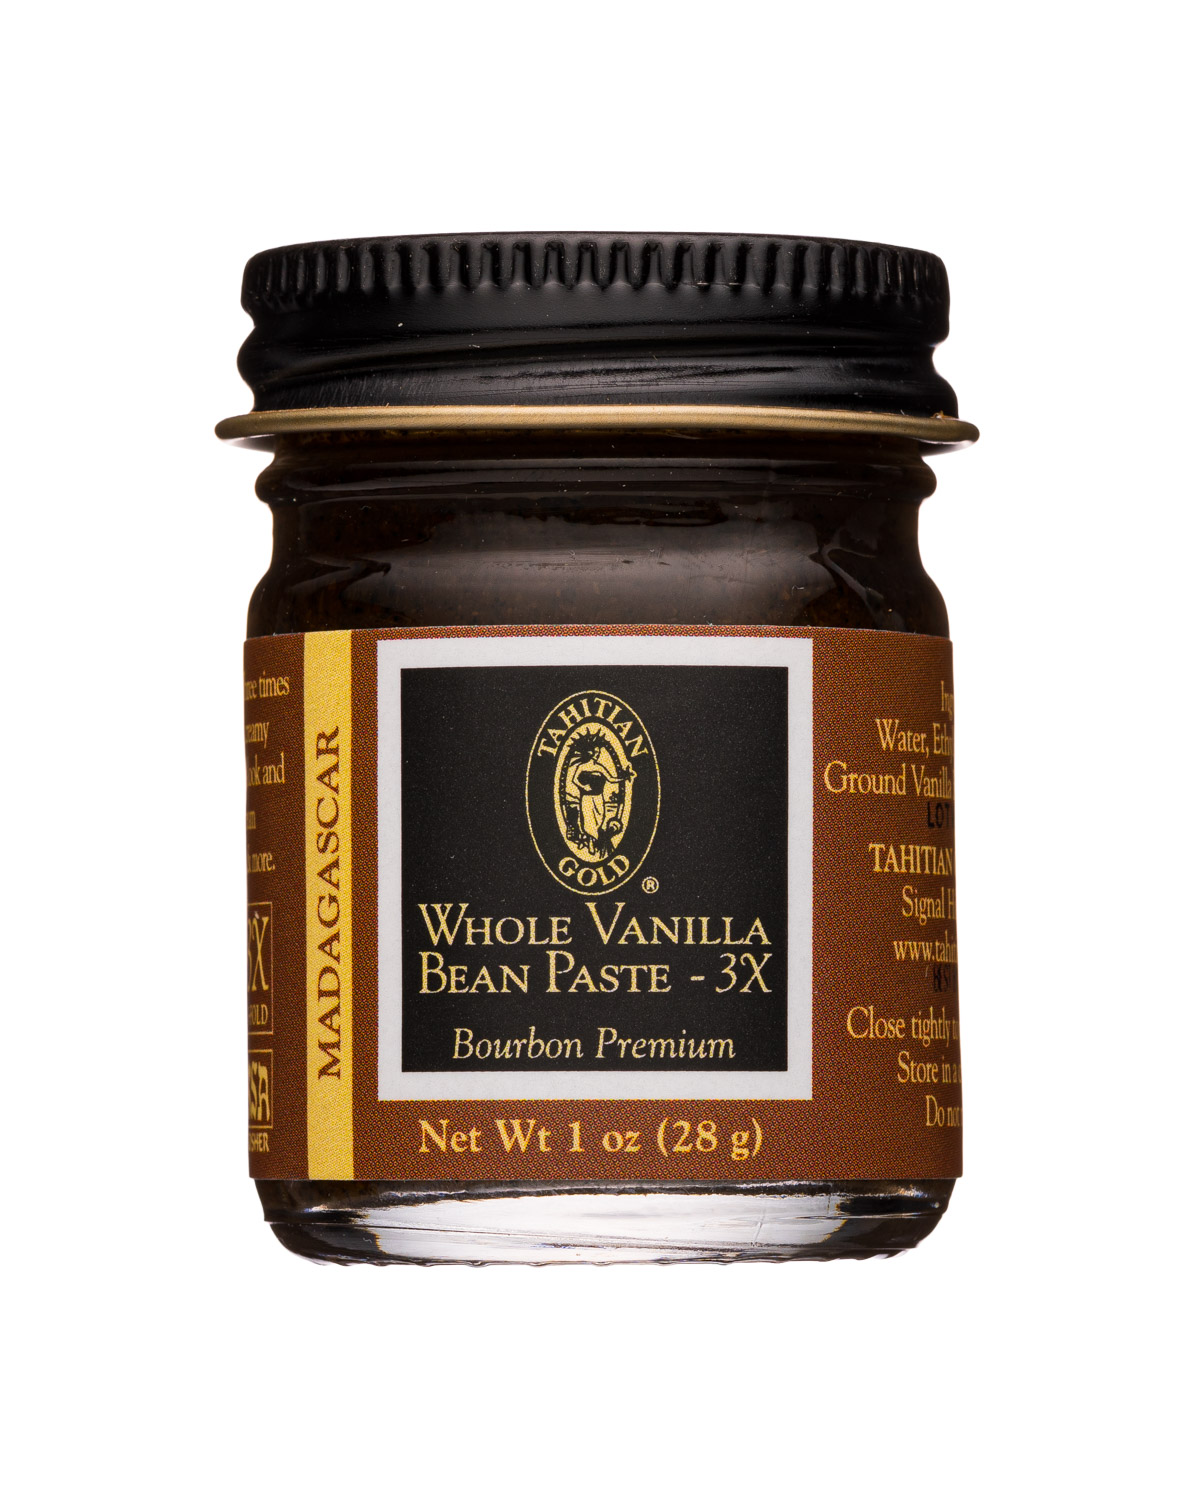 Whole Vanilla Bean Paste 3X - Bourbon Premium (Madagascar)